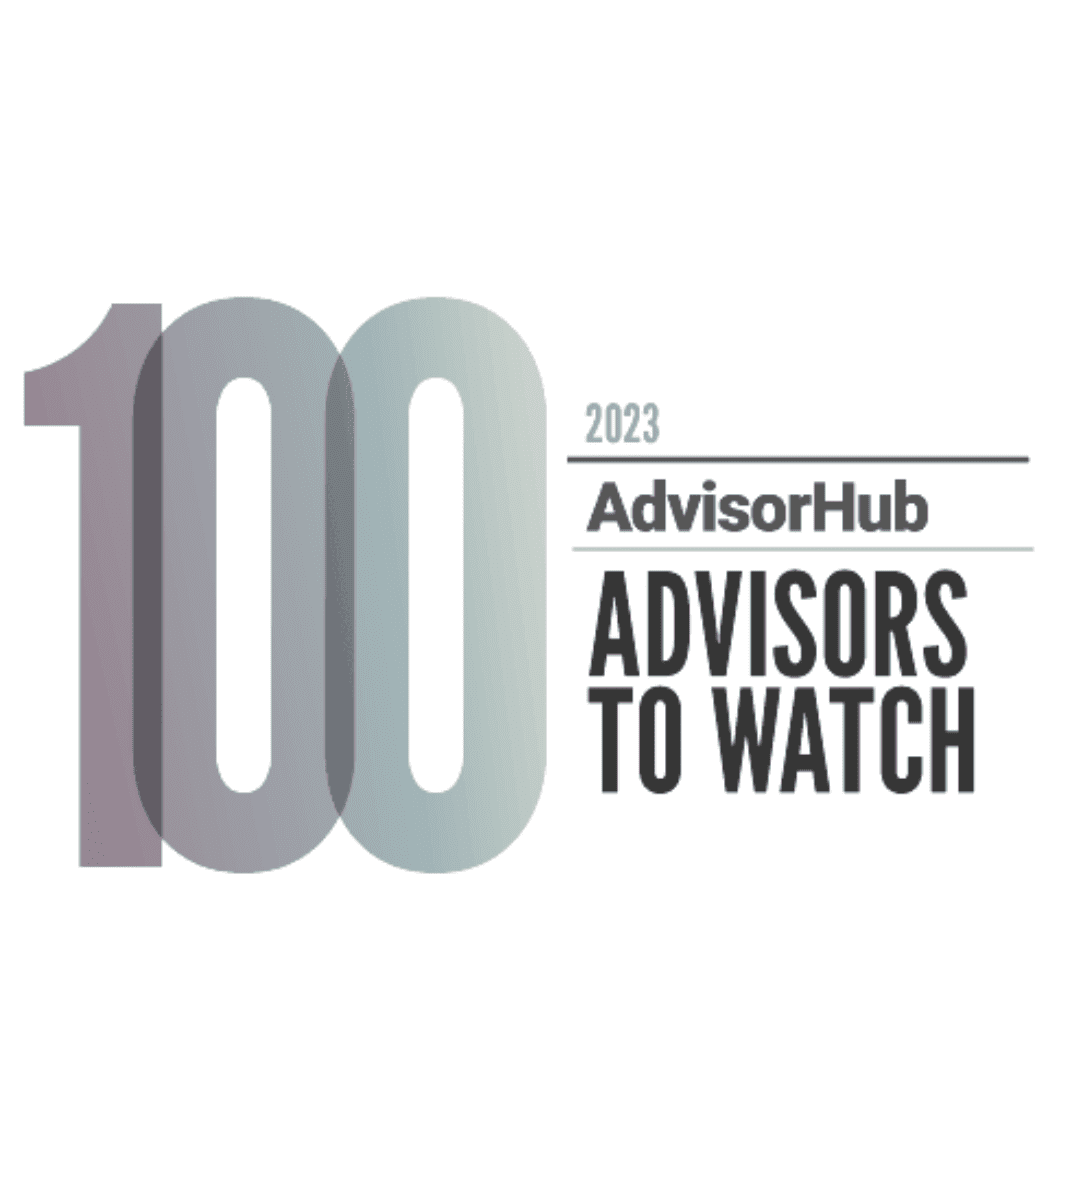 AdvisorHub Advisors to Watch